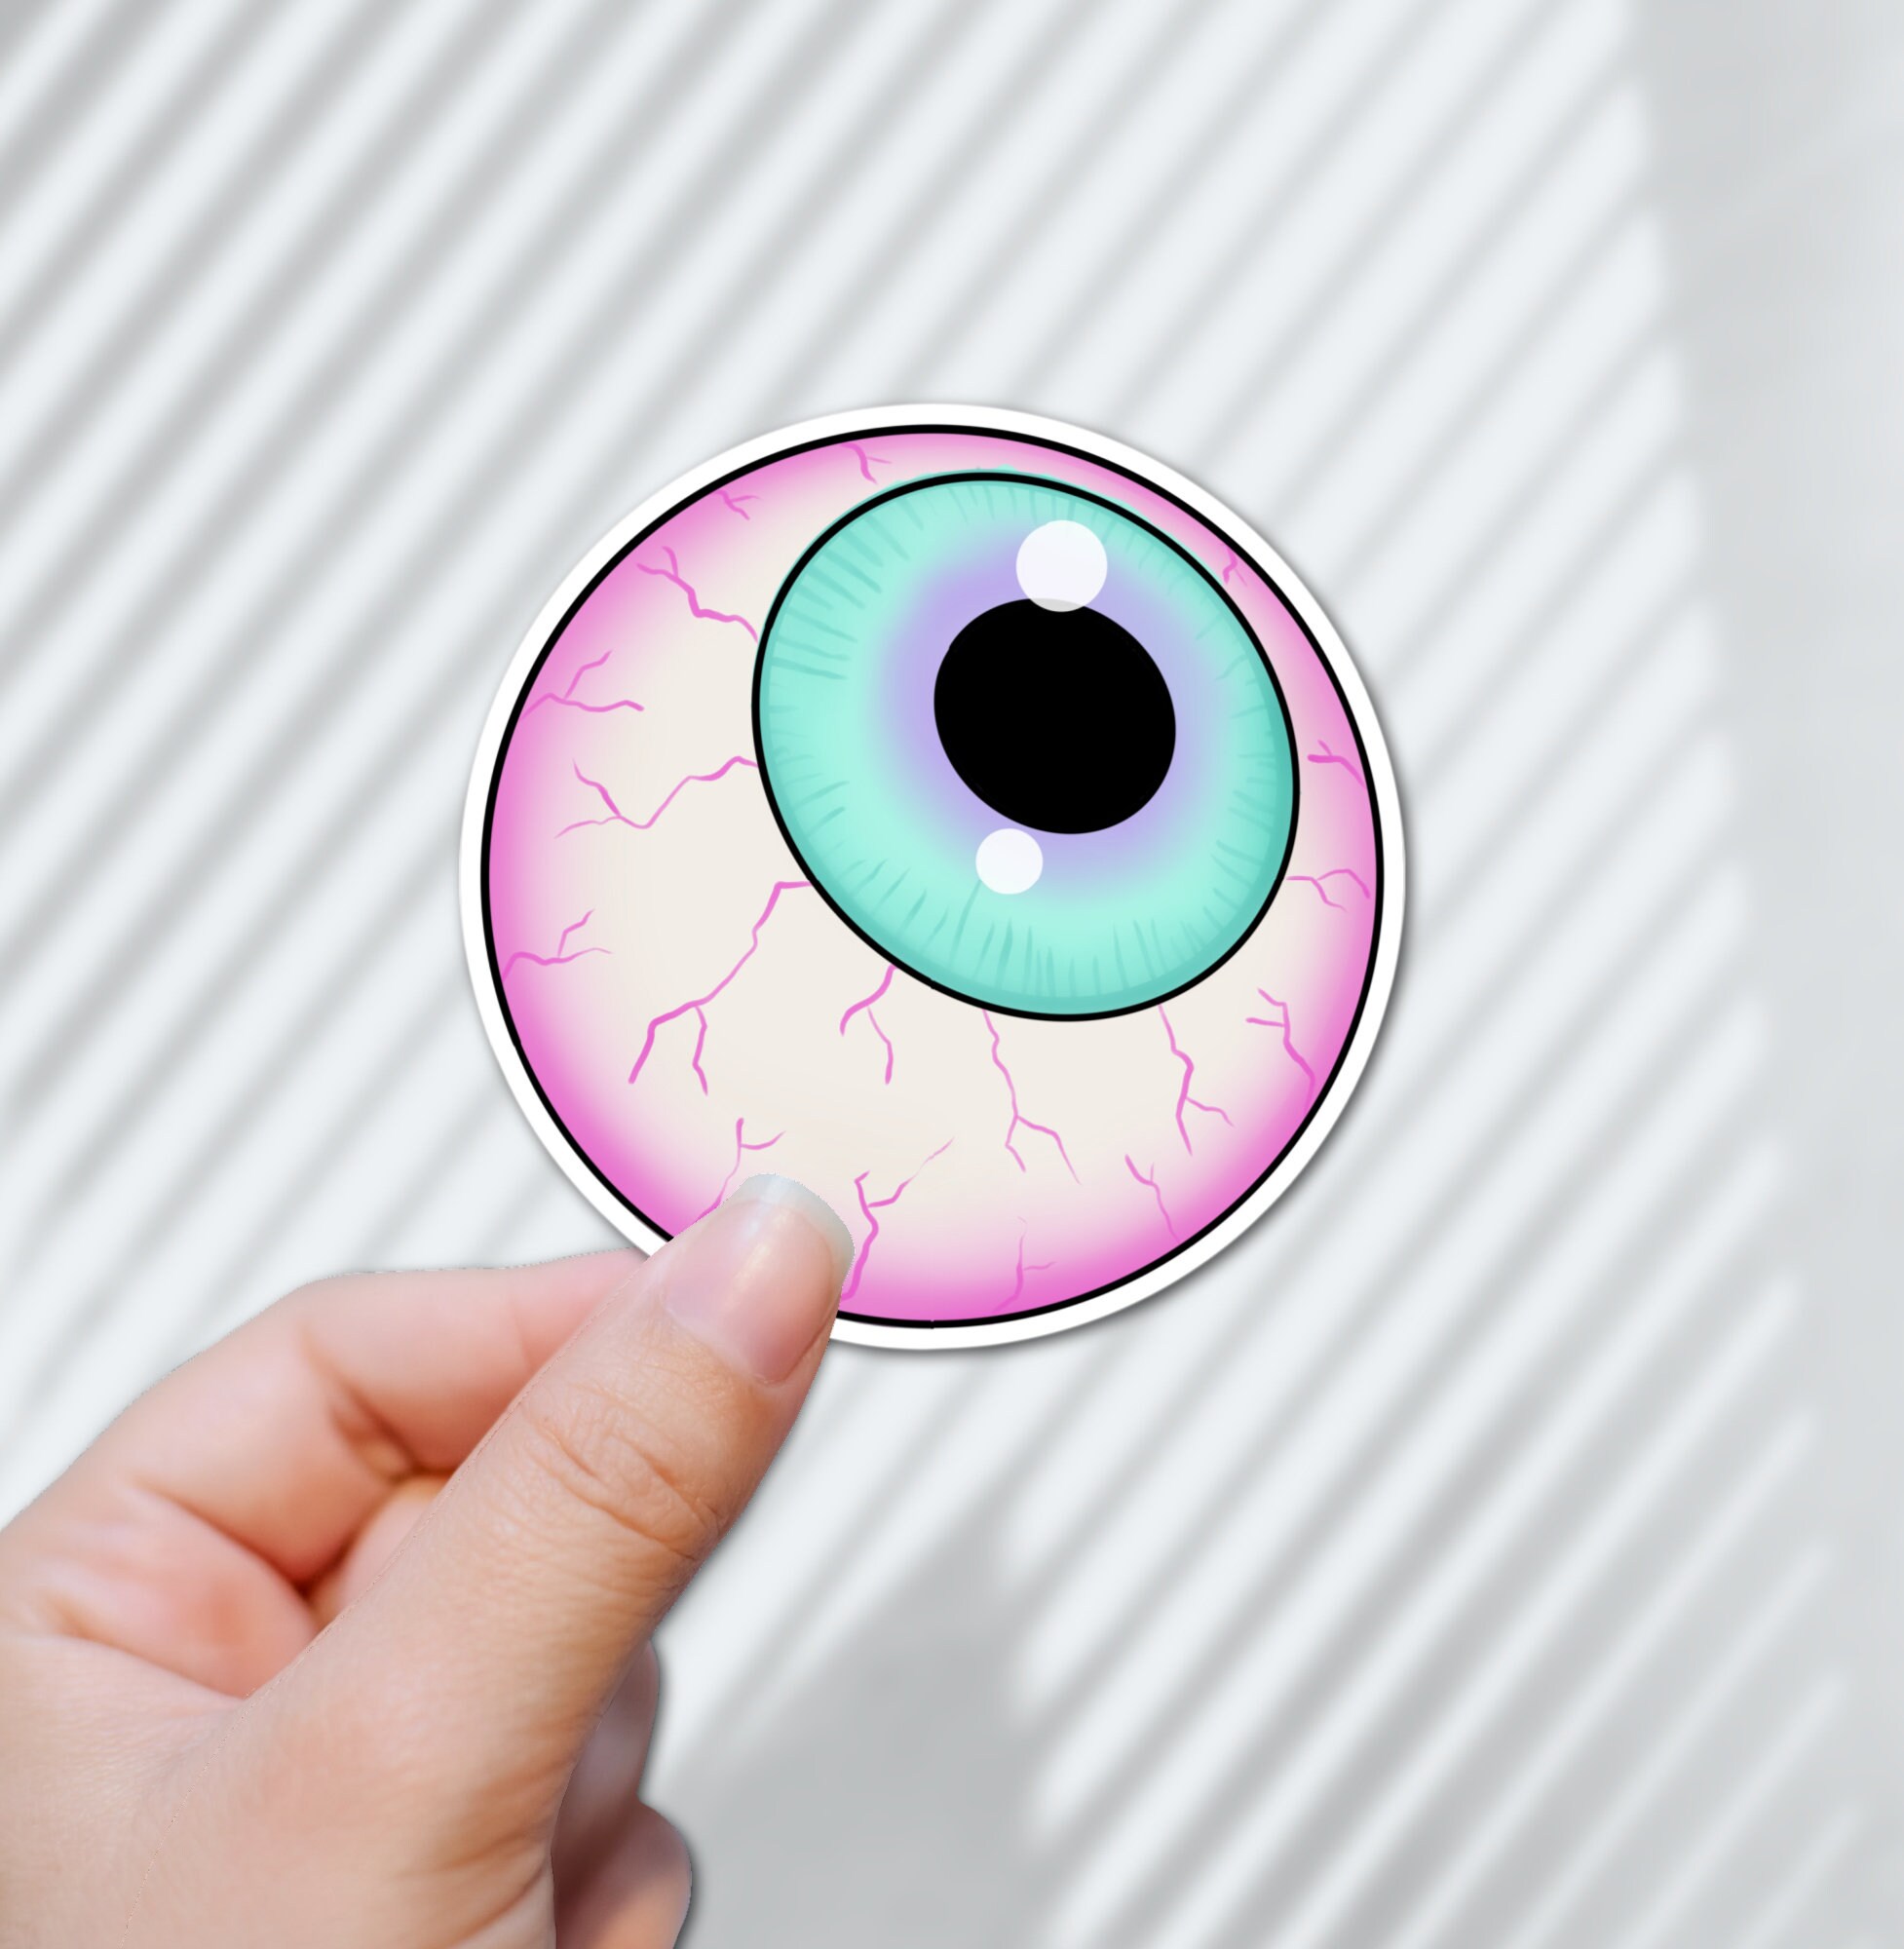 Eyeball Sticker – I Heart Guts – Museum Store – International